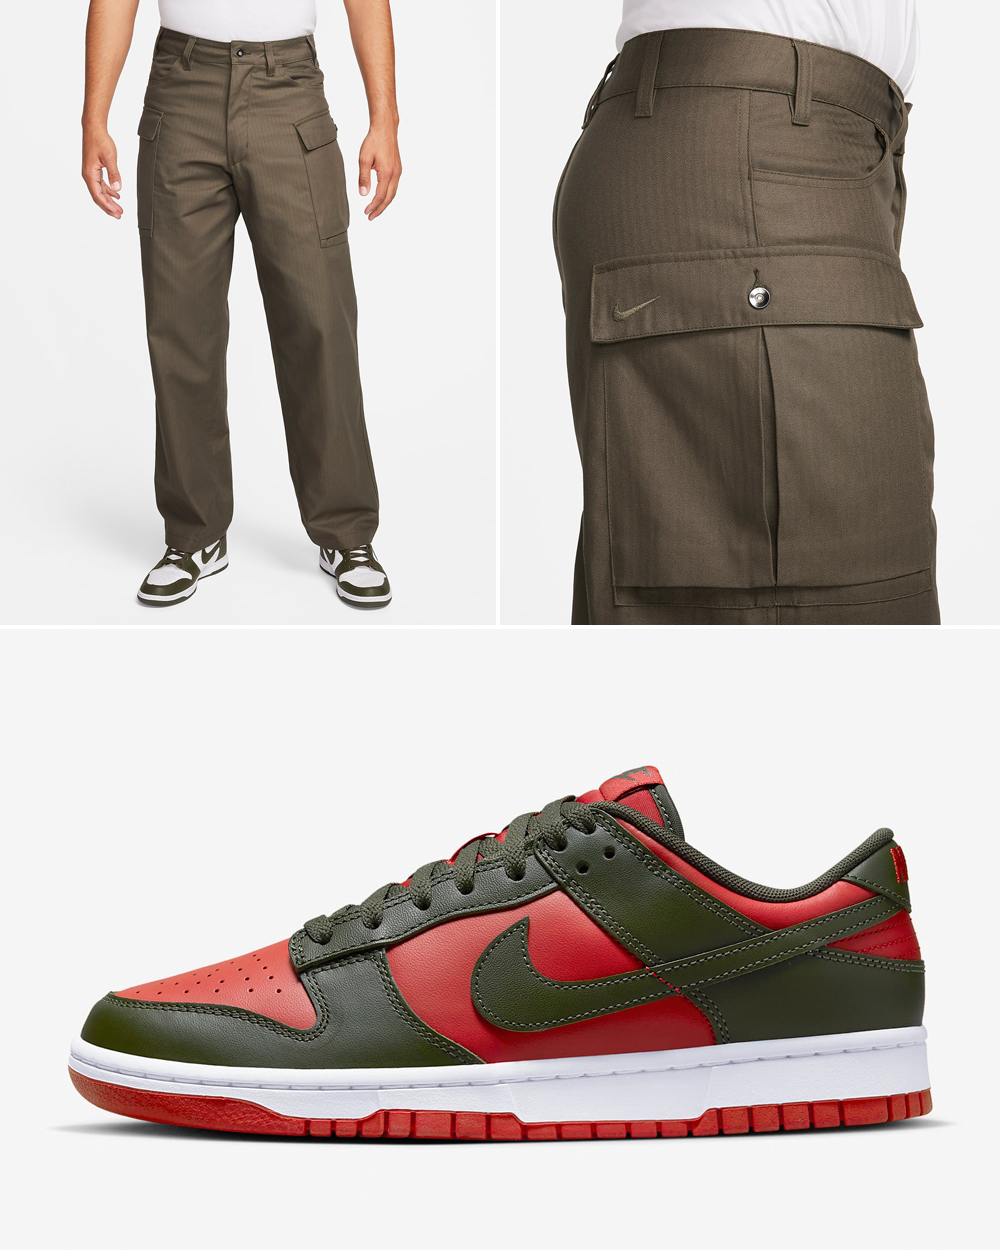 Nike-Dunk-Low-Mystic-Red-Cargo-Khaki-Jacket-Matching-Pants